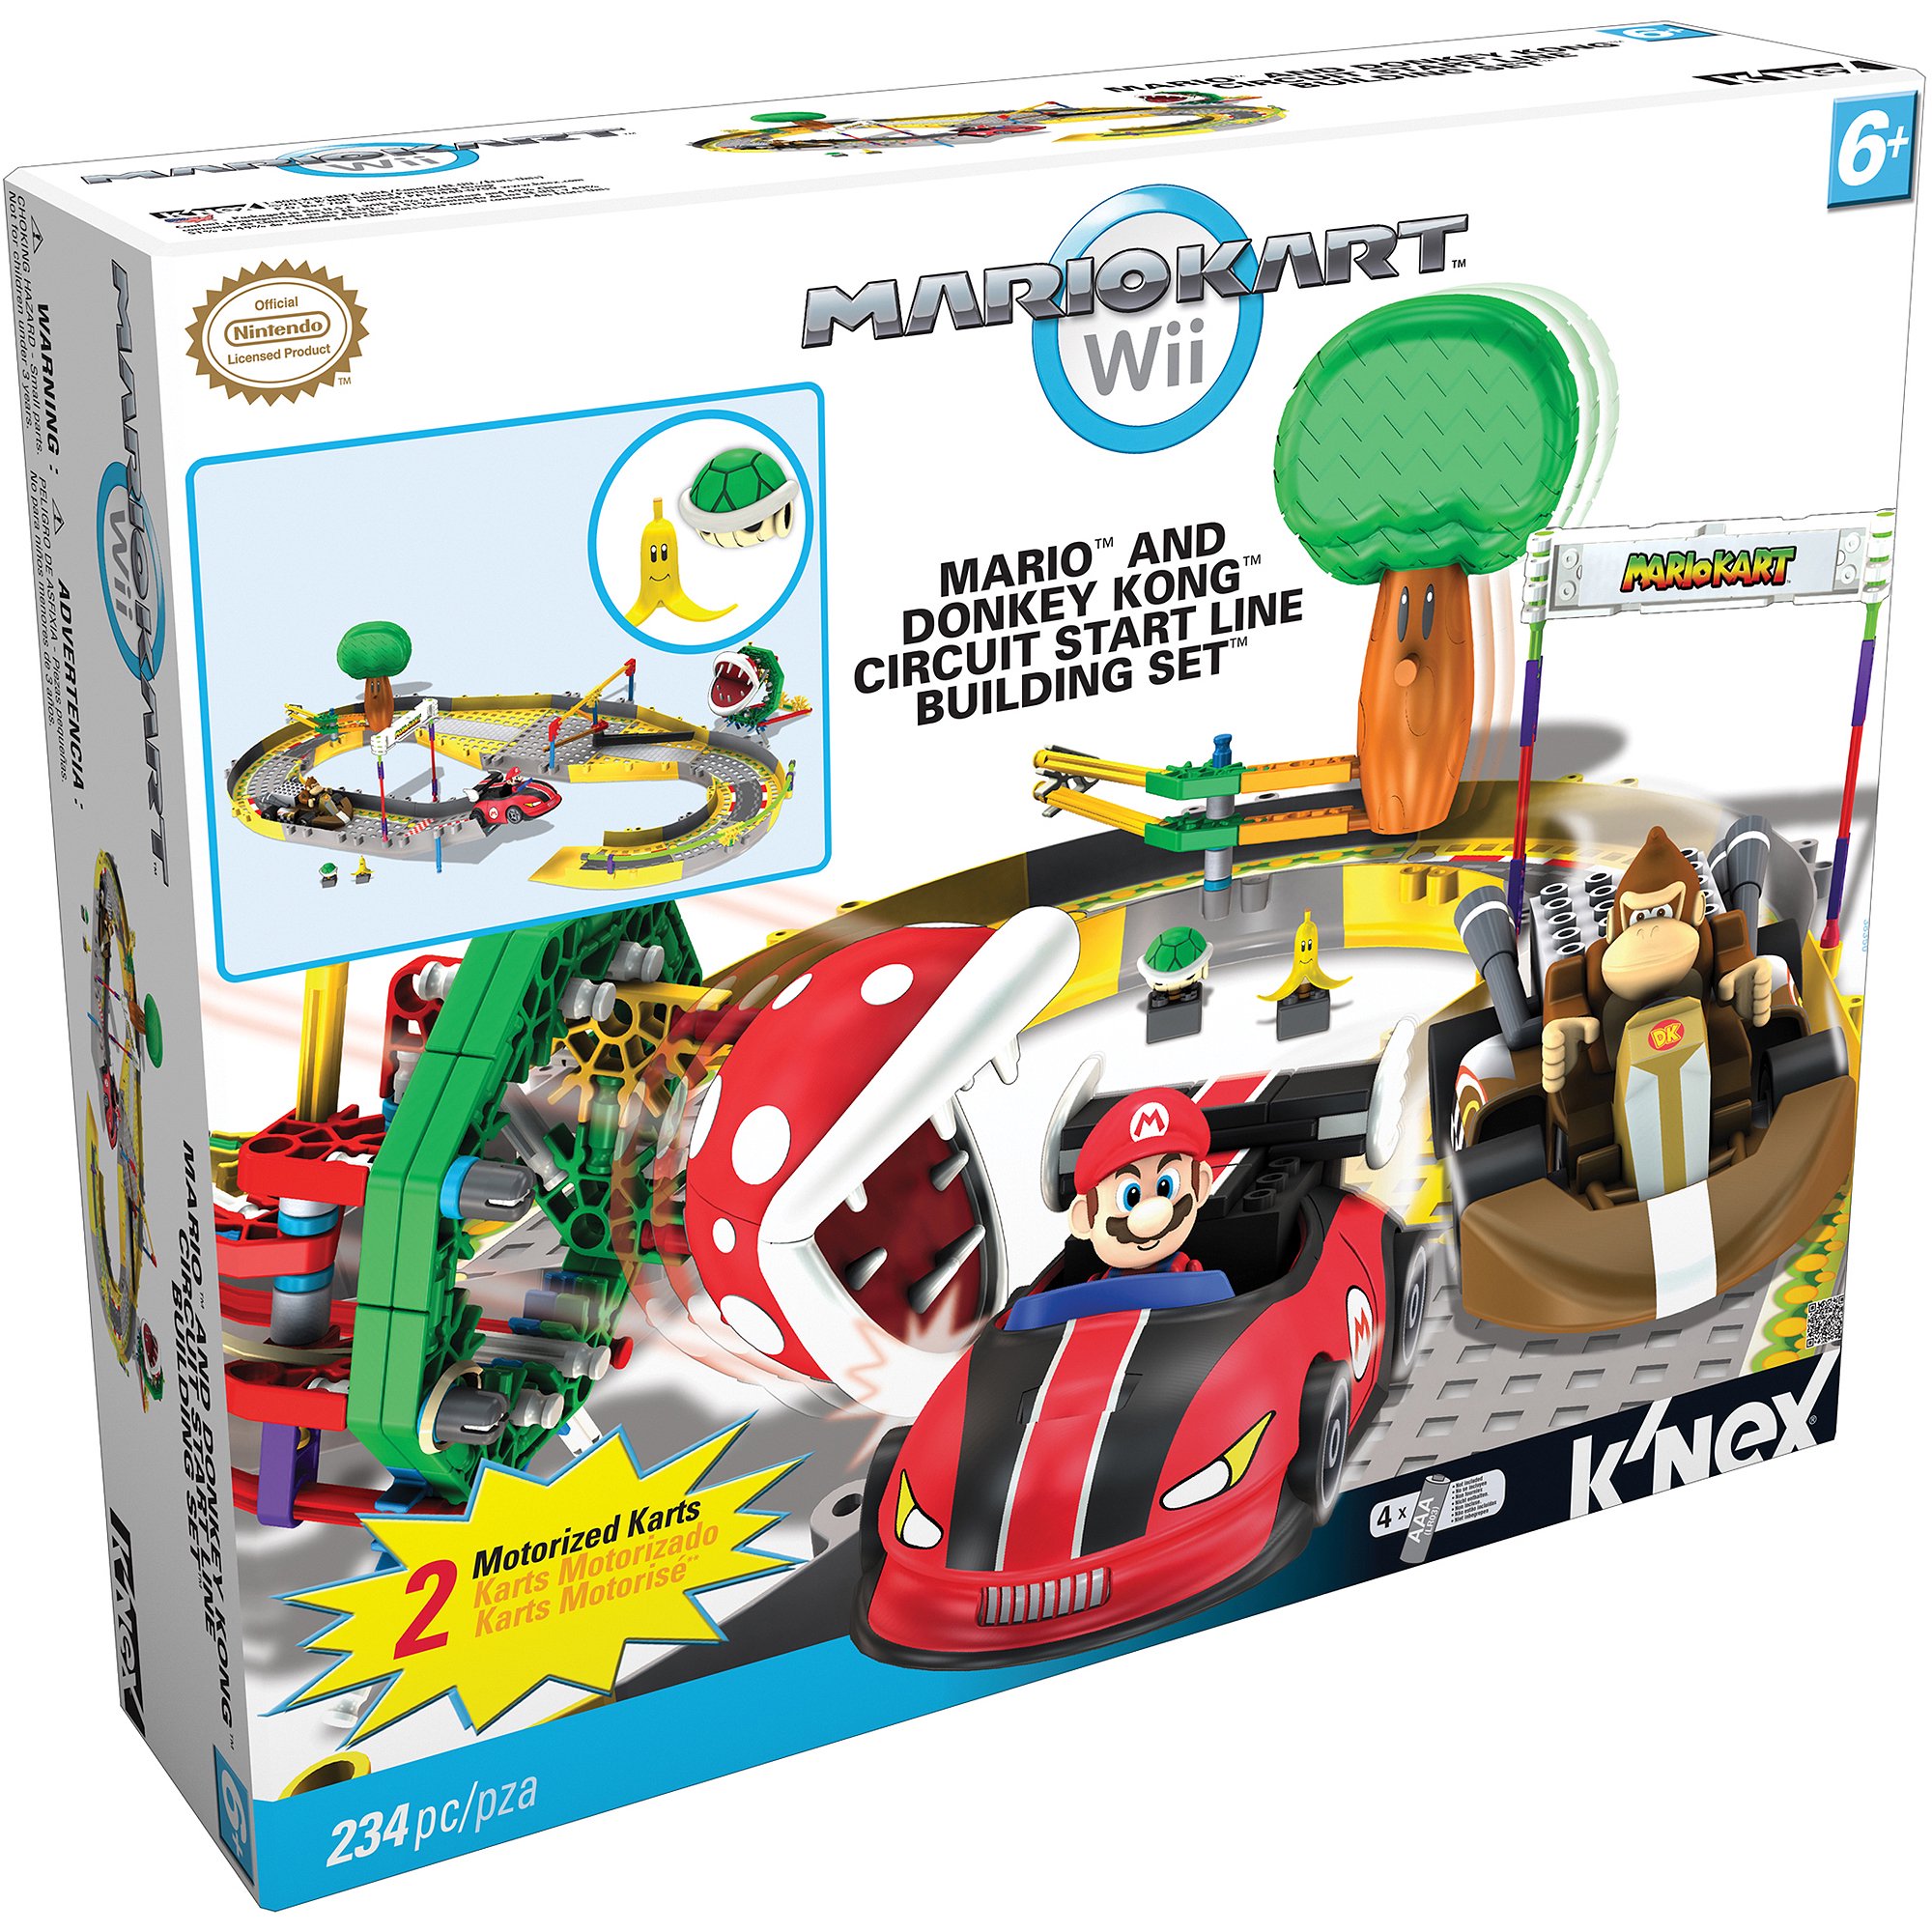 K'nex Mario & donkey Kong Circuit Wii Start Line Building Set, Knex 234 Piece